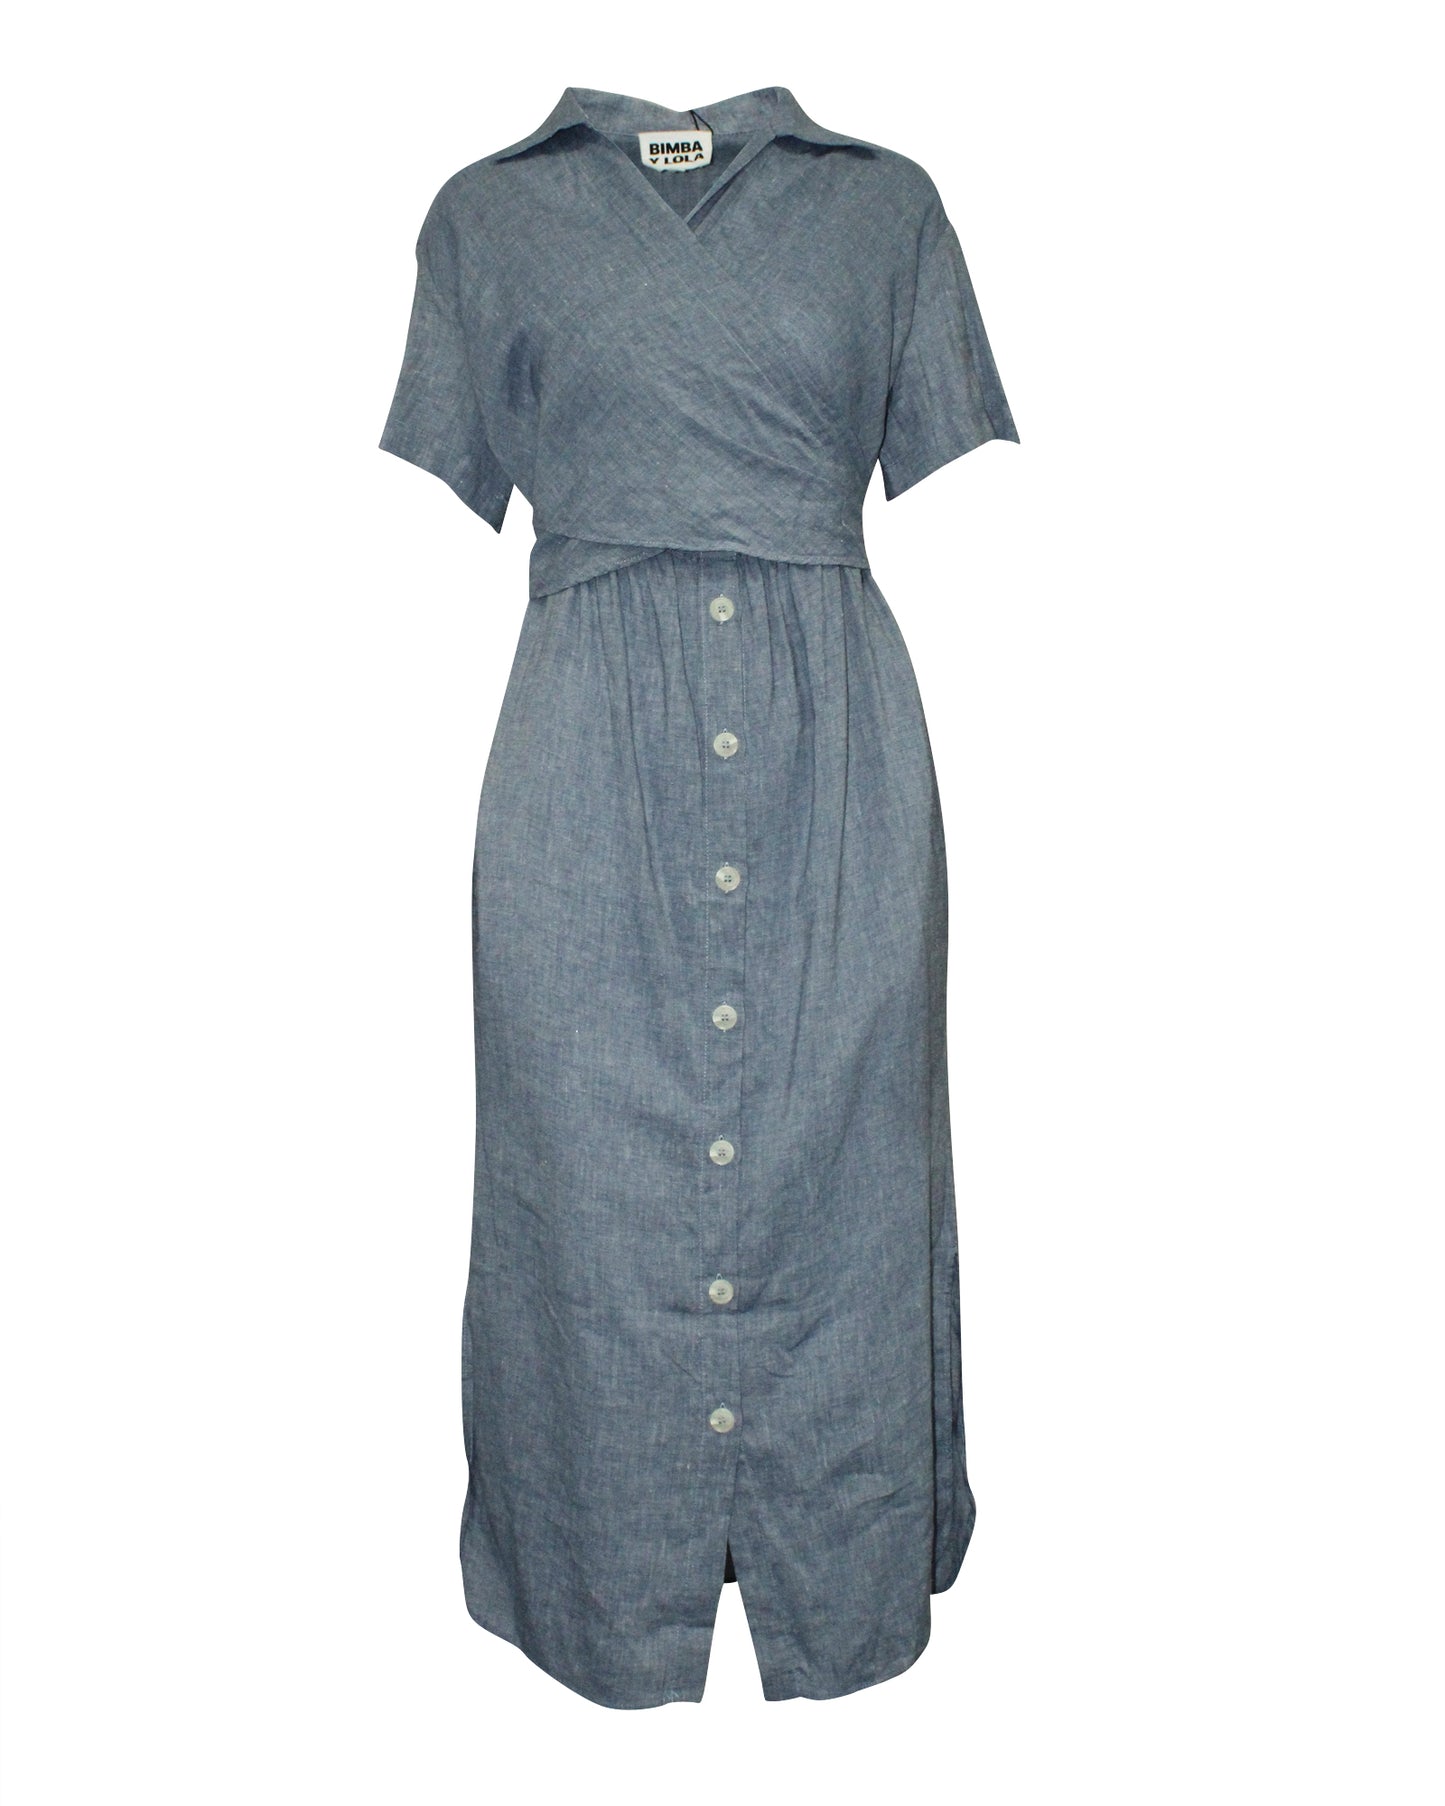 Indigo Blue Off-Shoulder Dress